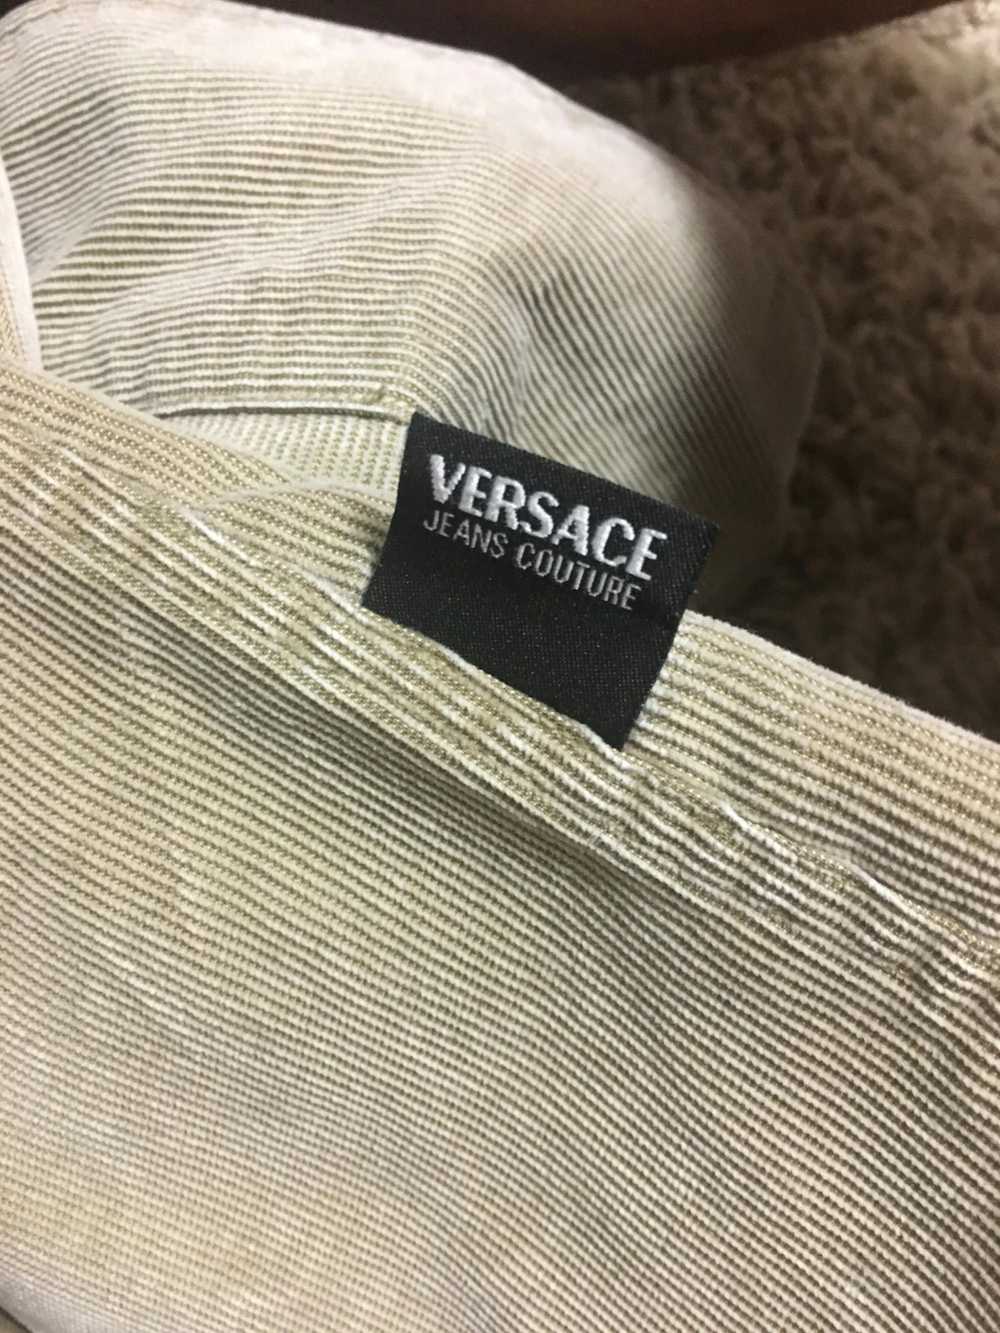 Versace Versace vintage button up rare - image 6